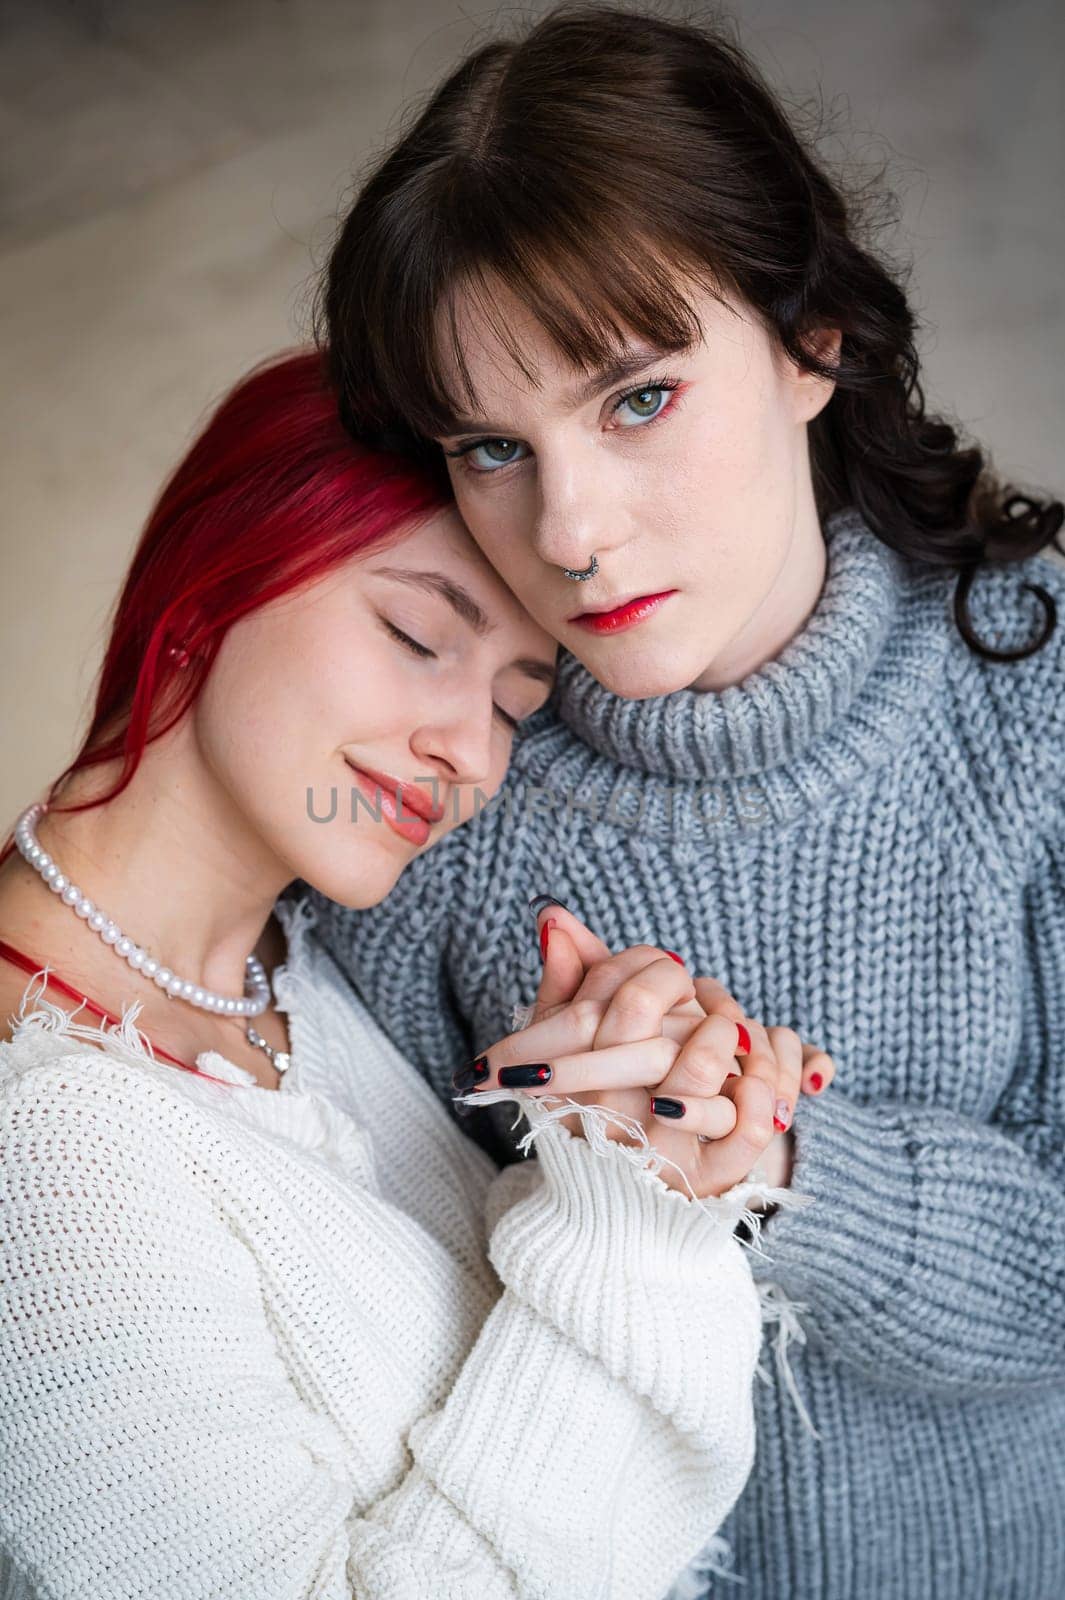 Portrait of two tenderly hugging women dressed in sweaters. Lesbian intimacy